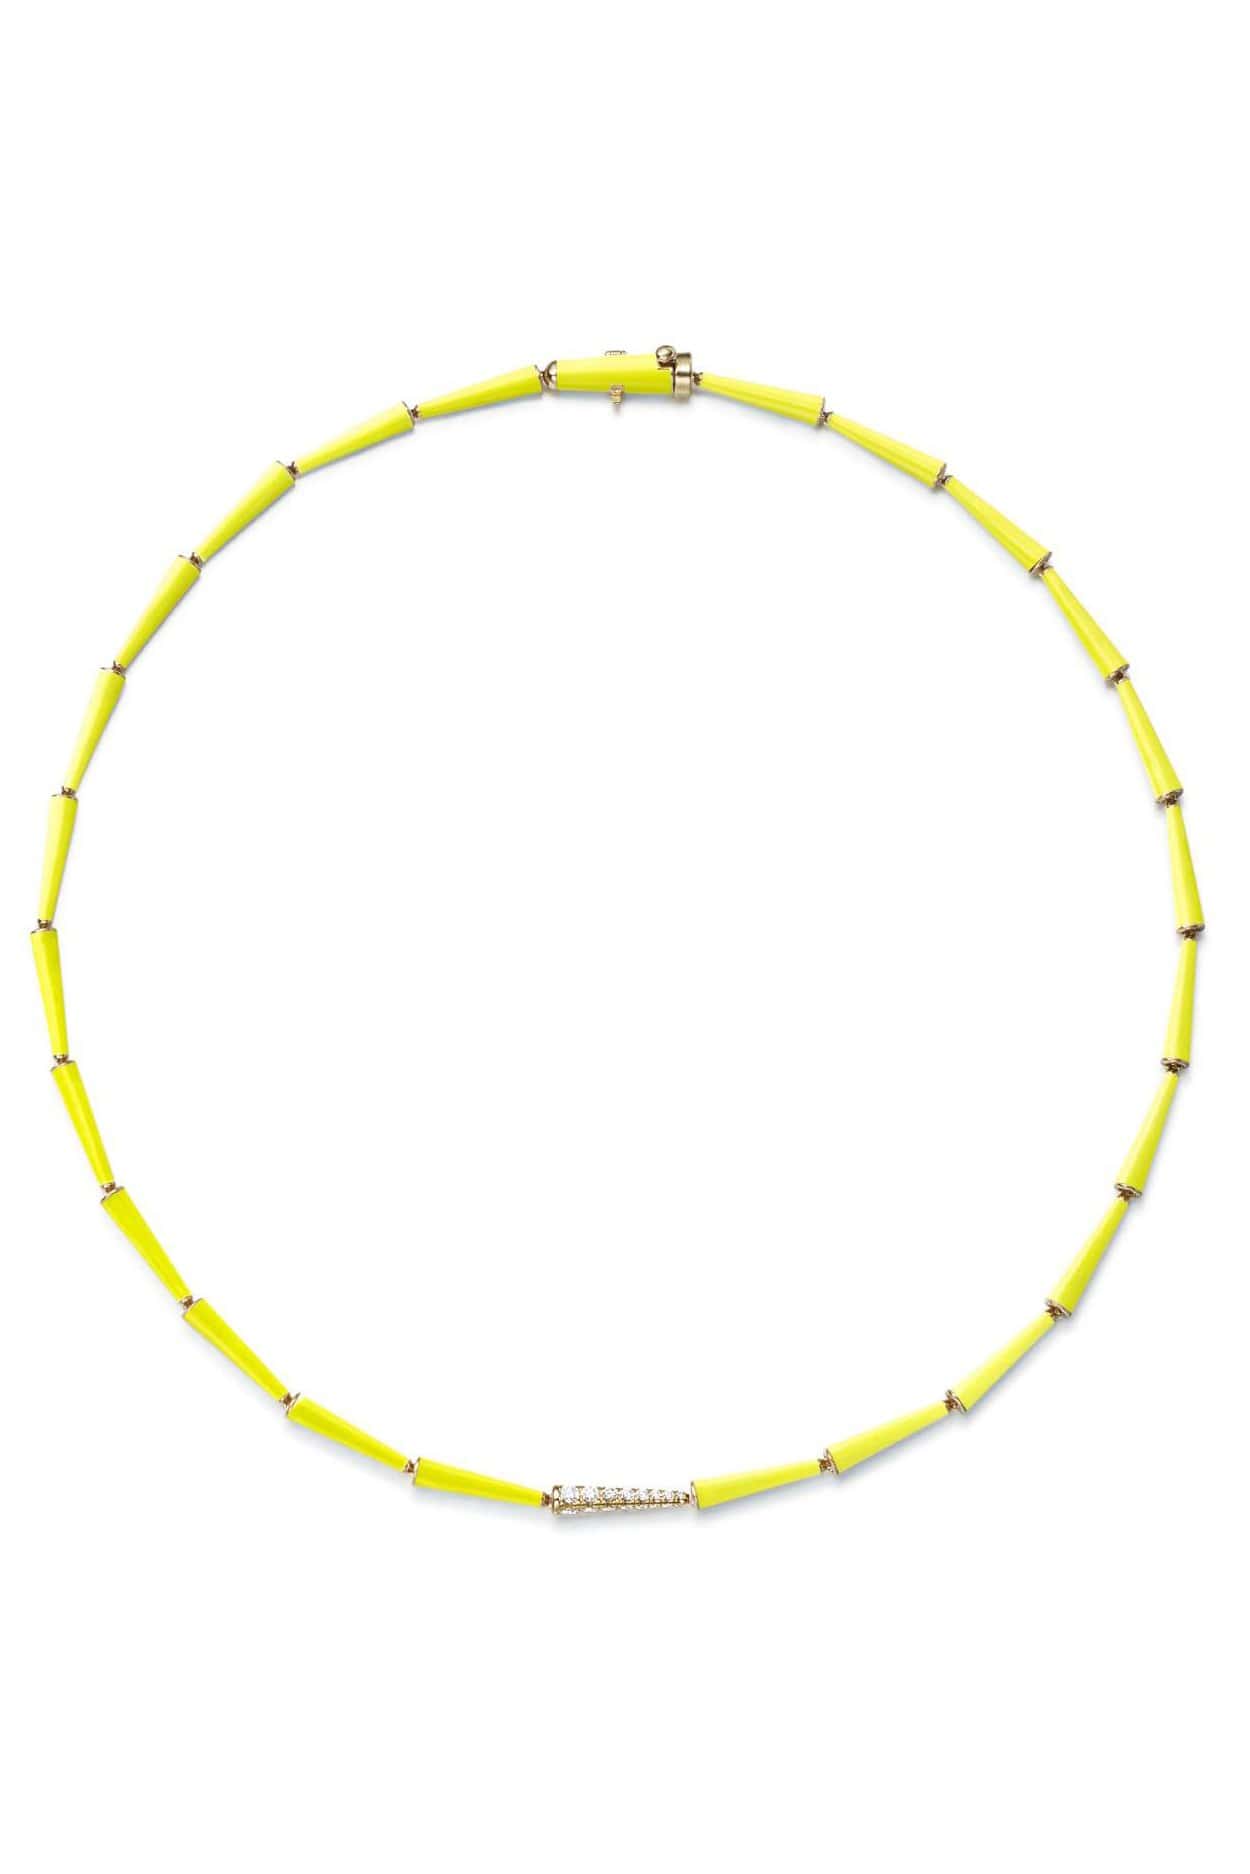 MELISSA KAYE-Neon Yellow Lola Linked Necklace-YELLOW GOLD